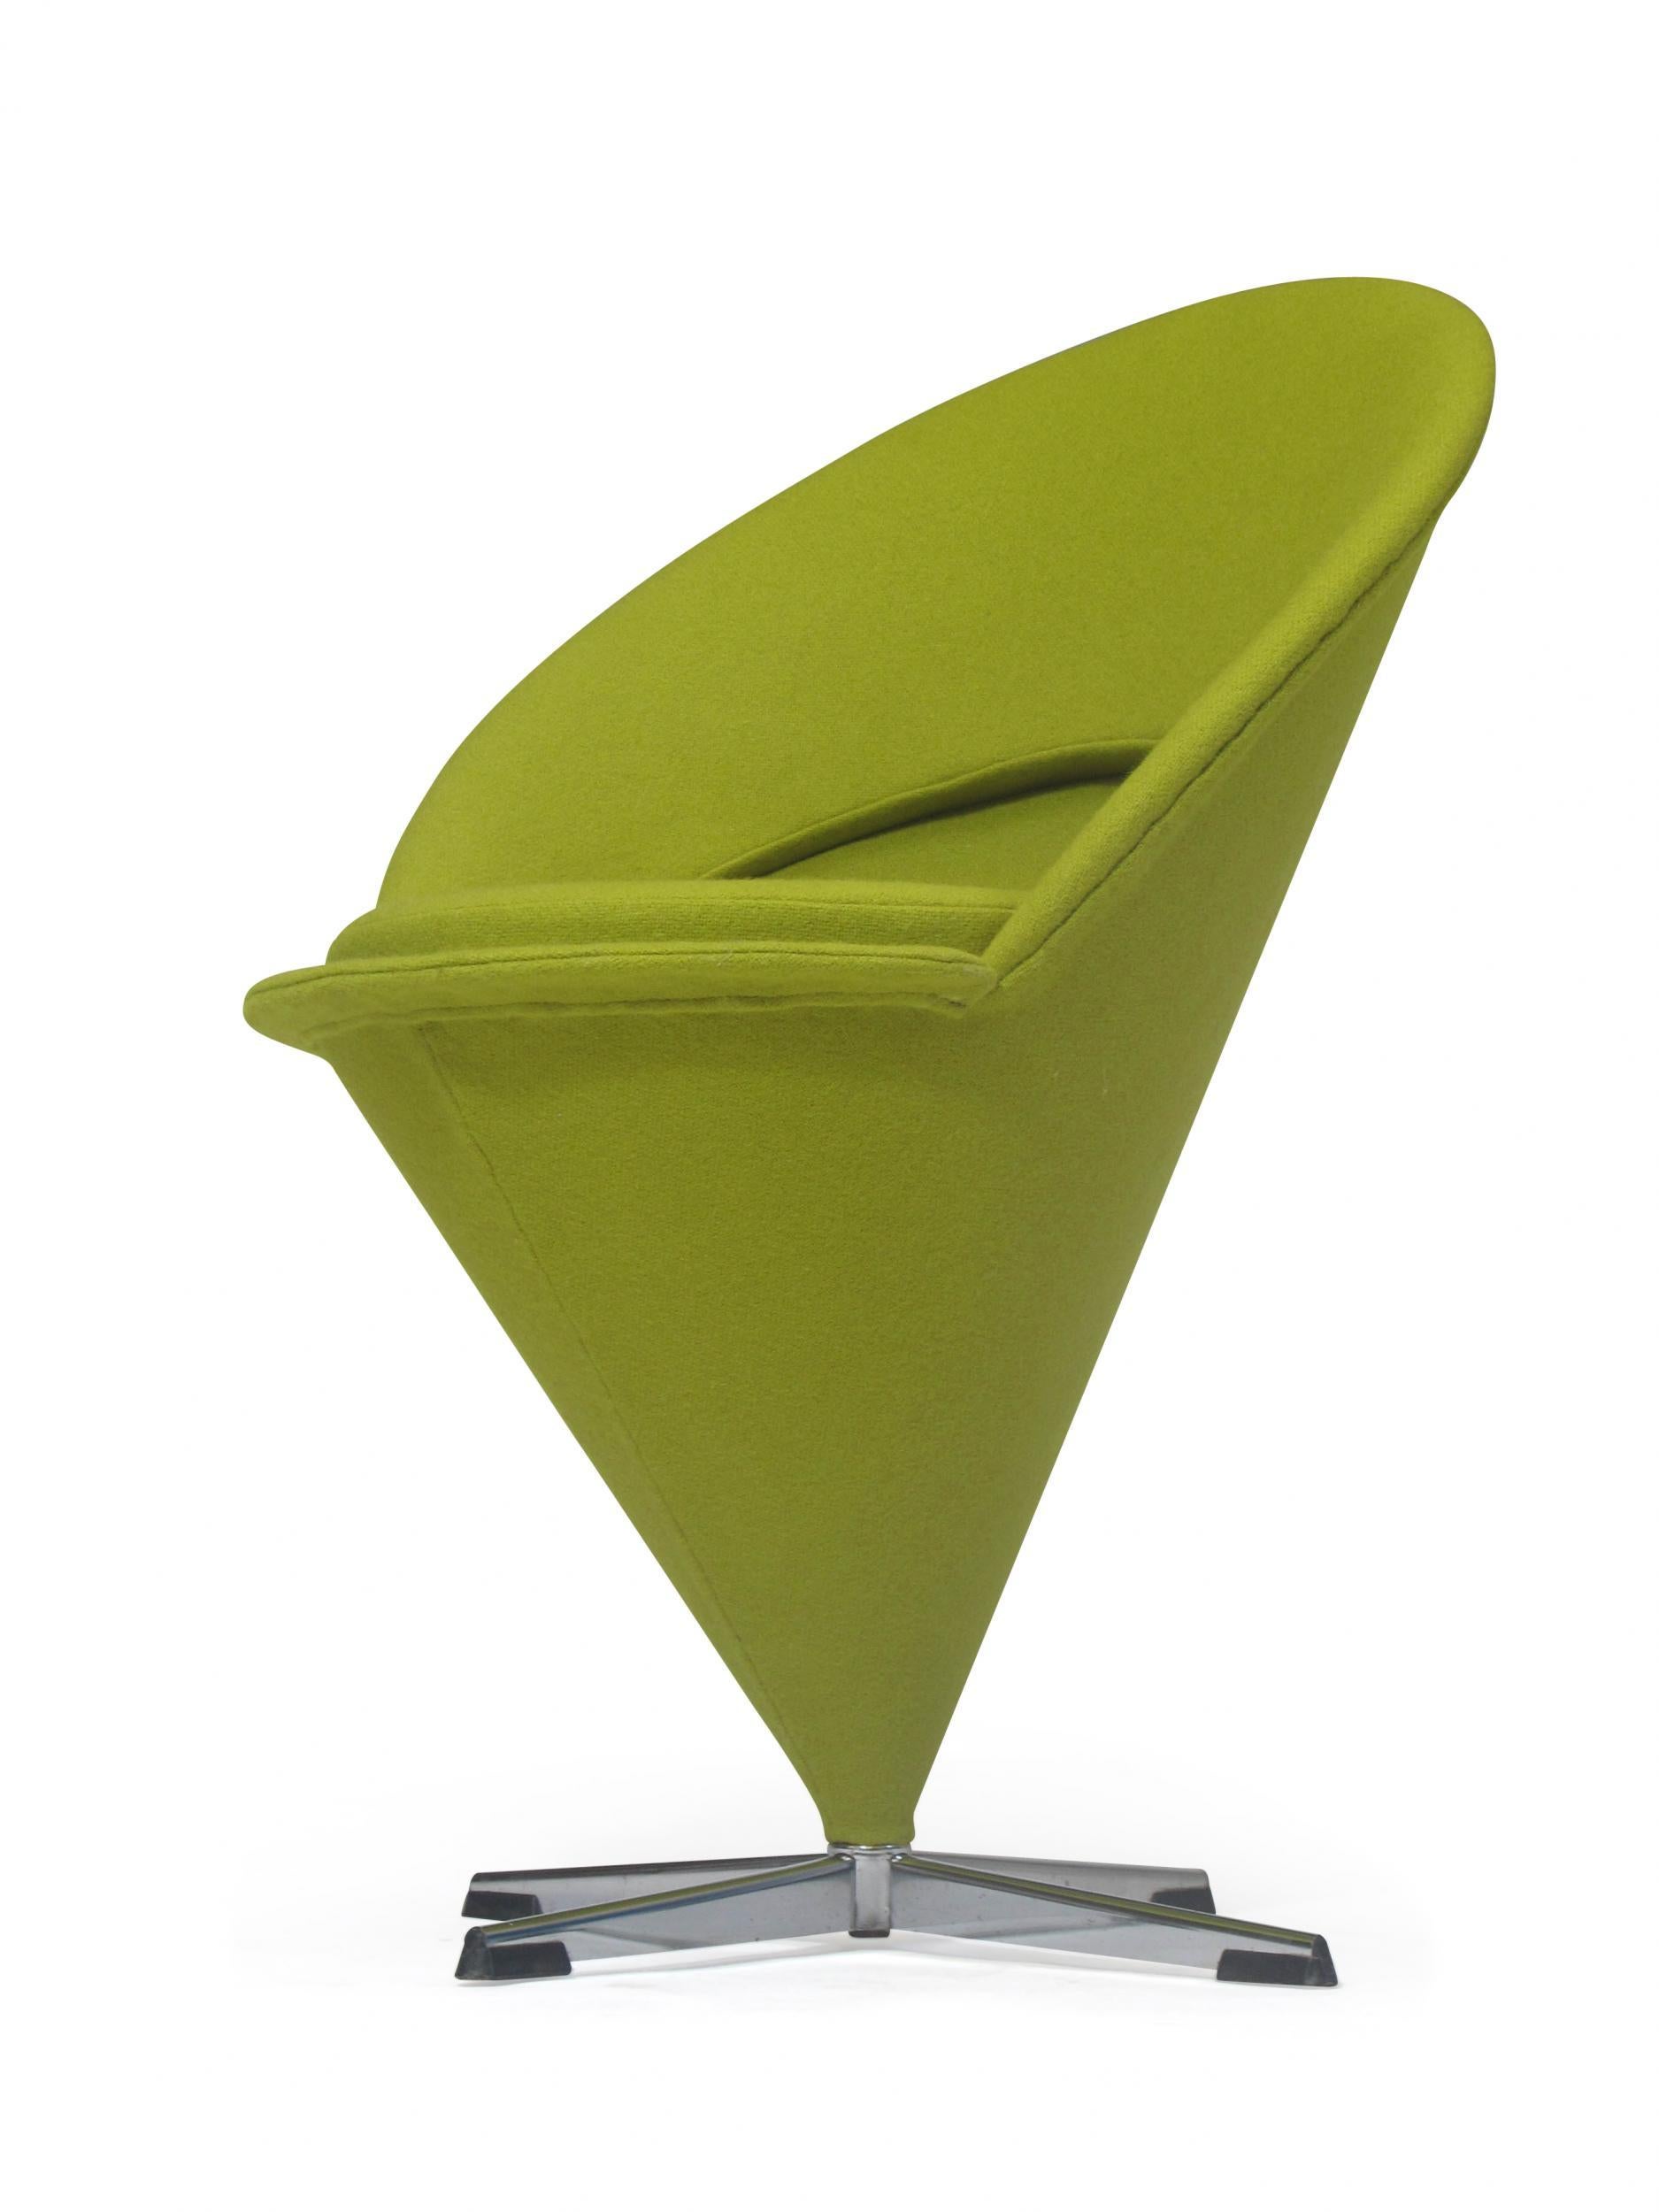 Scandinavian Modern Verner Panton Cone Chair For Sale